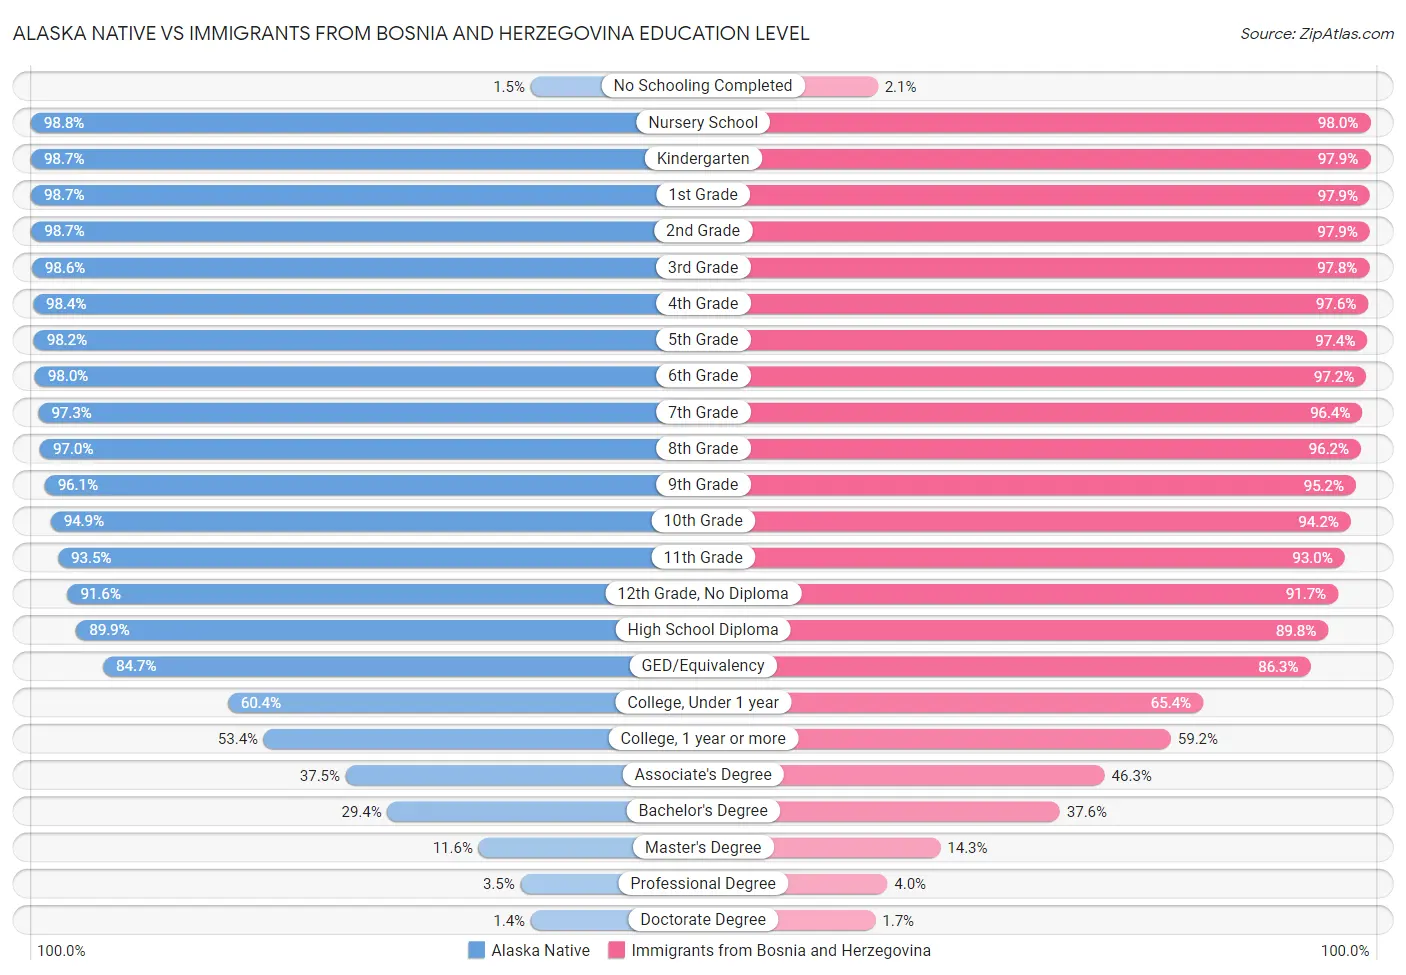 Alaska Native vs Immigrants from Bosnia and Herzegovina Education Level